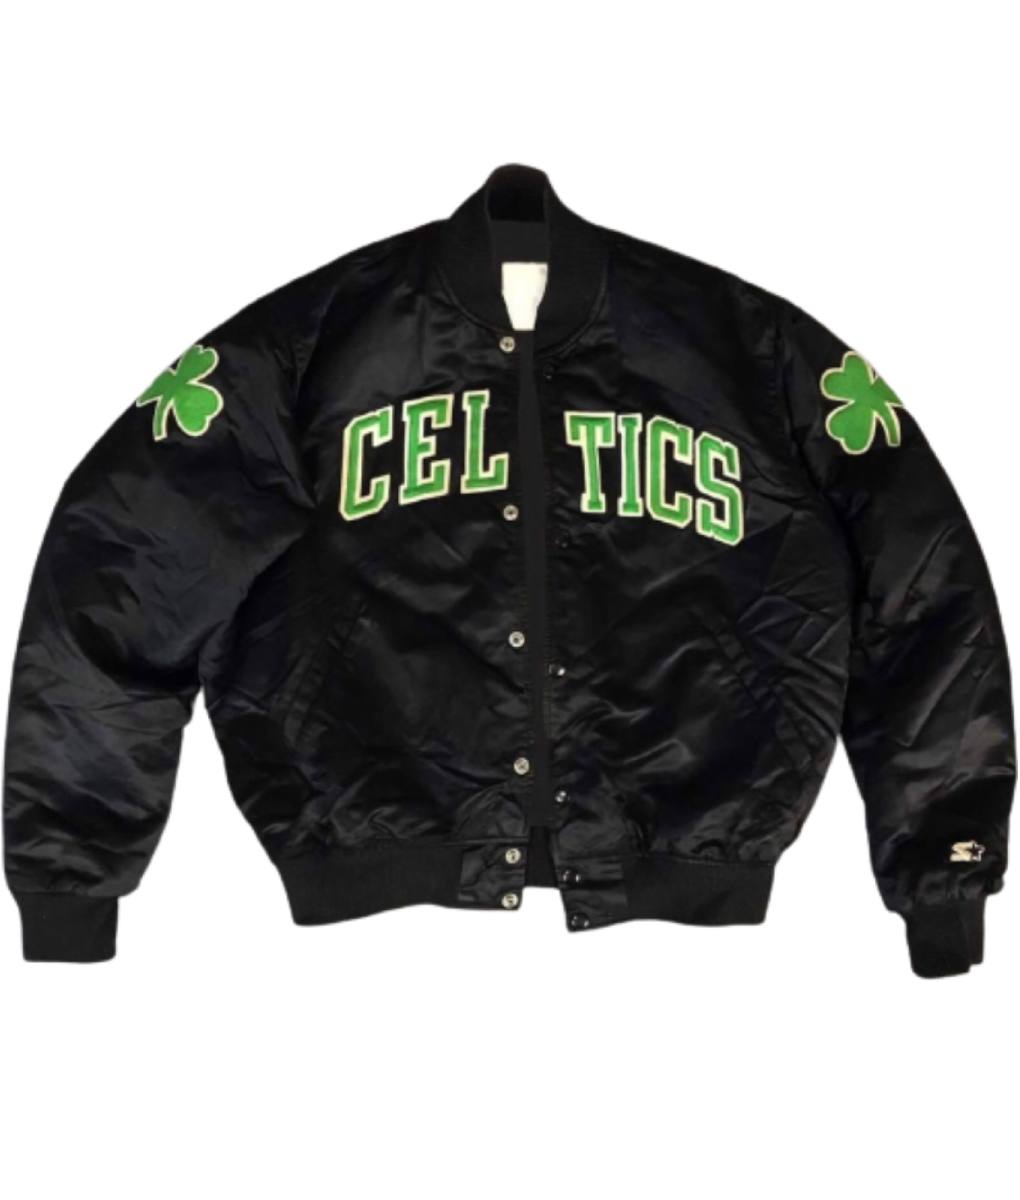 Boston Celtics Black Bomber Jacket (6)